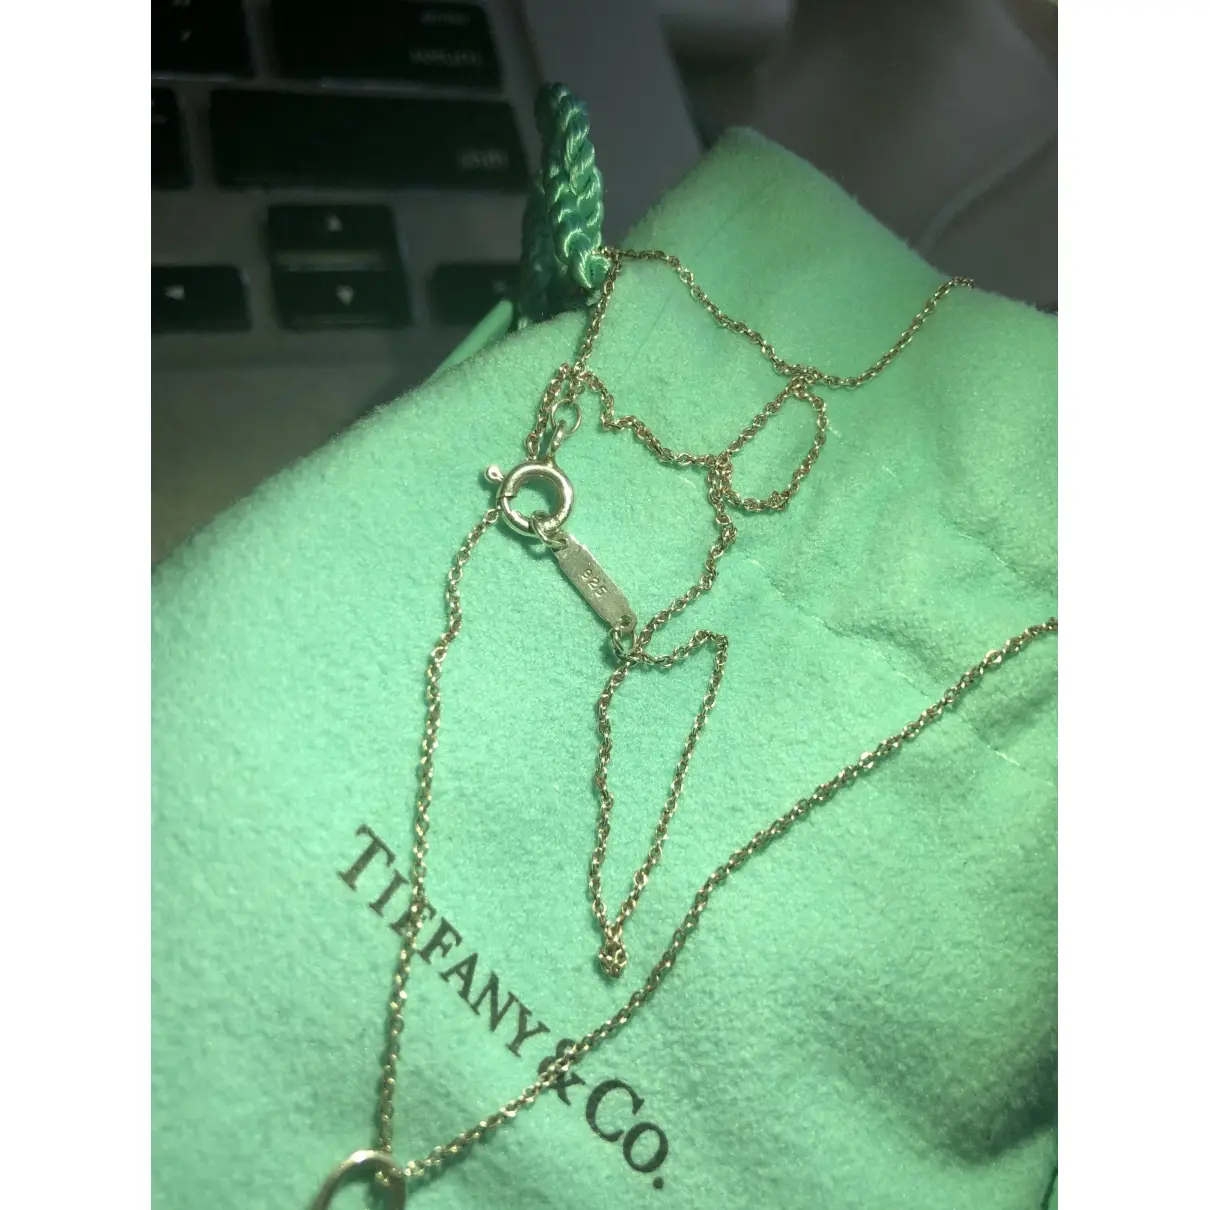 Buy Tiffany & Co Tiffany 1837 silver necklace online